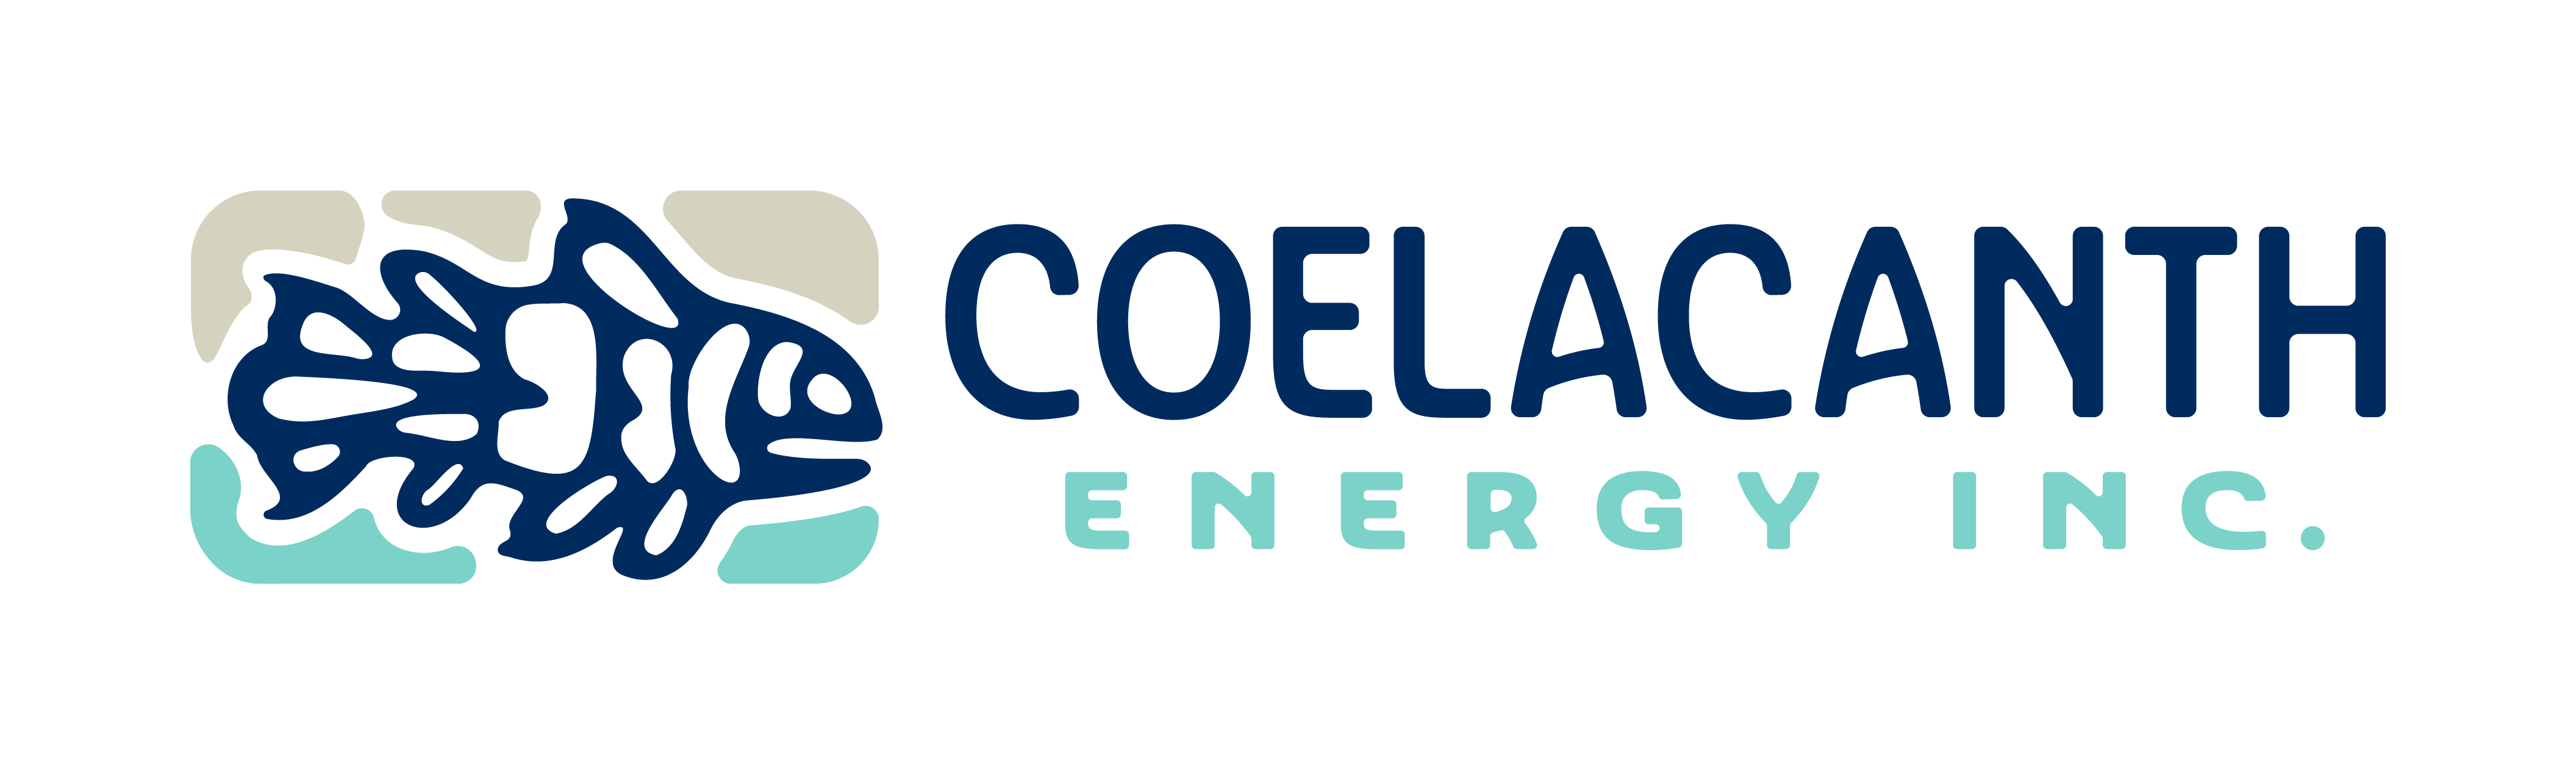 Coelacanth Energy Inc.